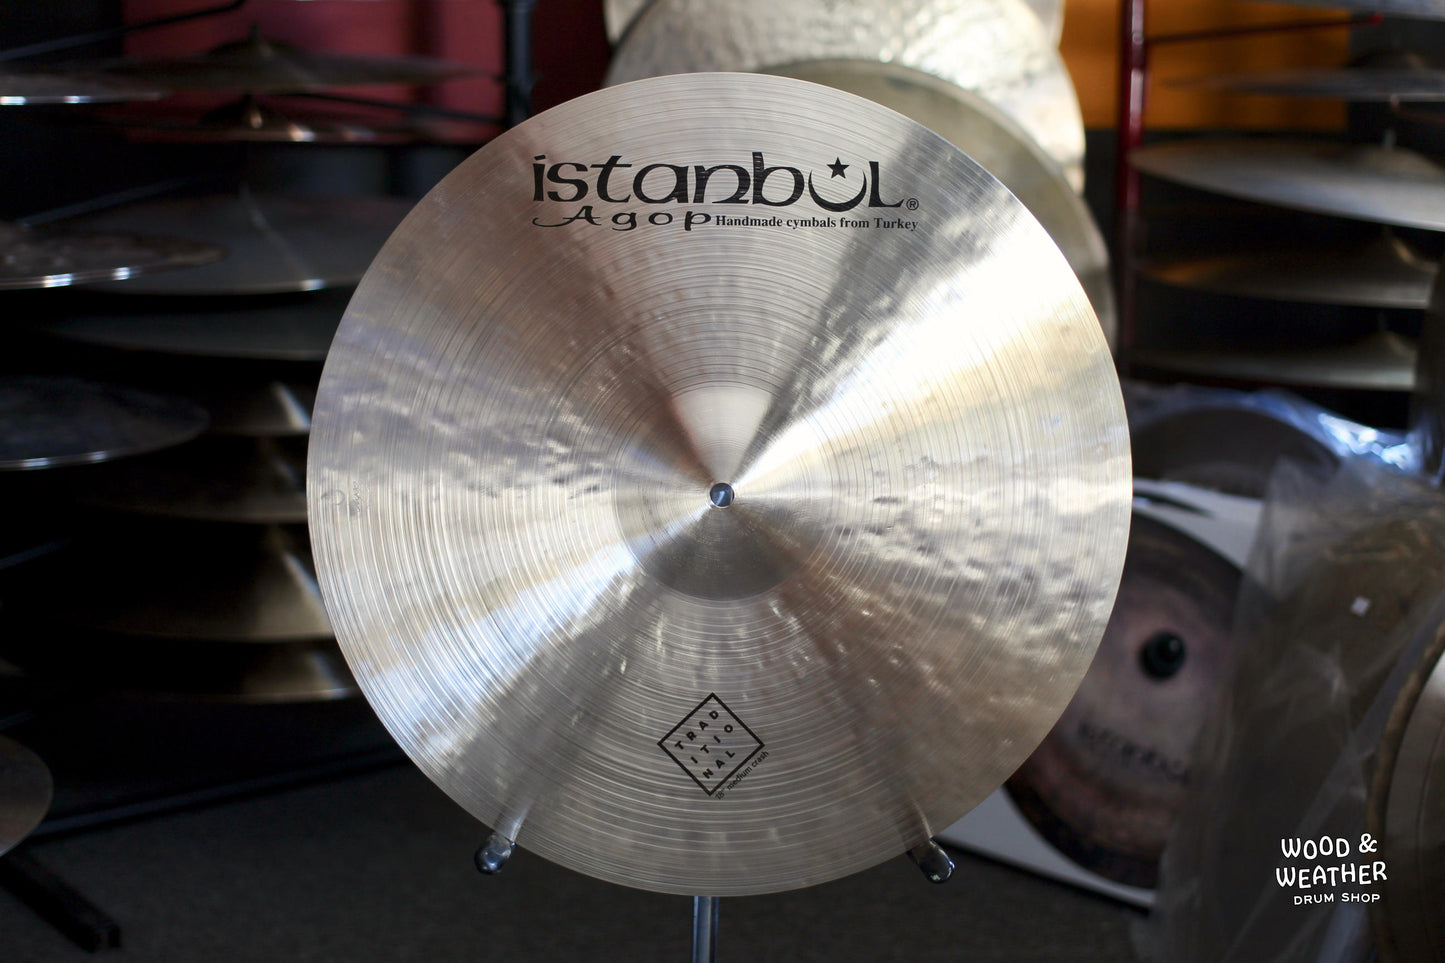 Istanbul Agop 18" Traditional Medium Crash Cymbal 1555g